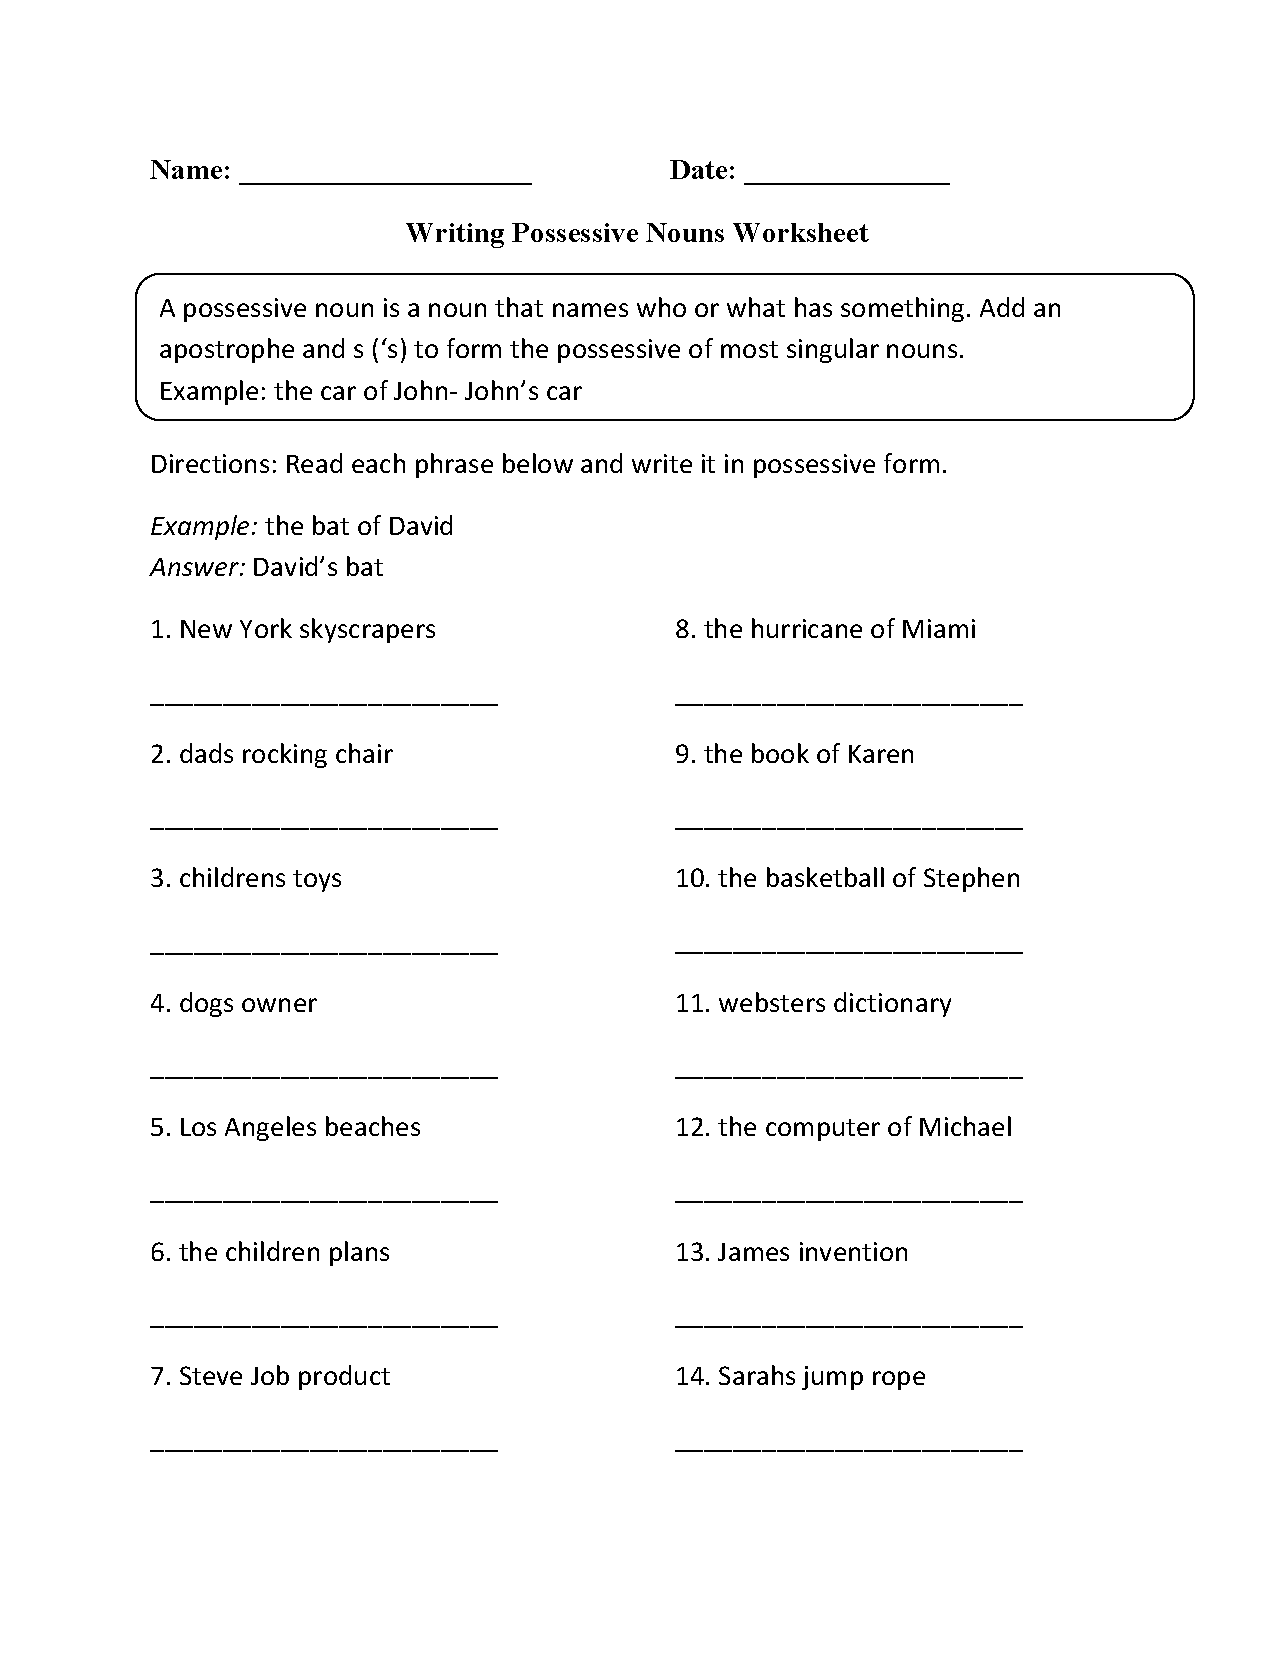 plural-nouns-worksheet-5th-grade